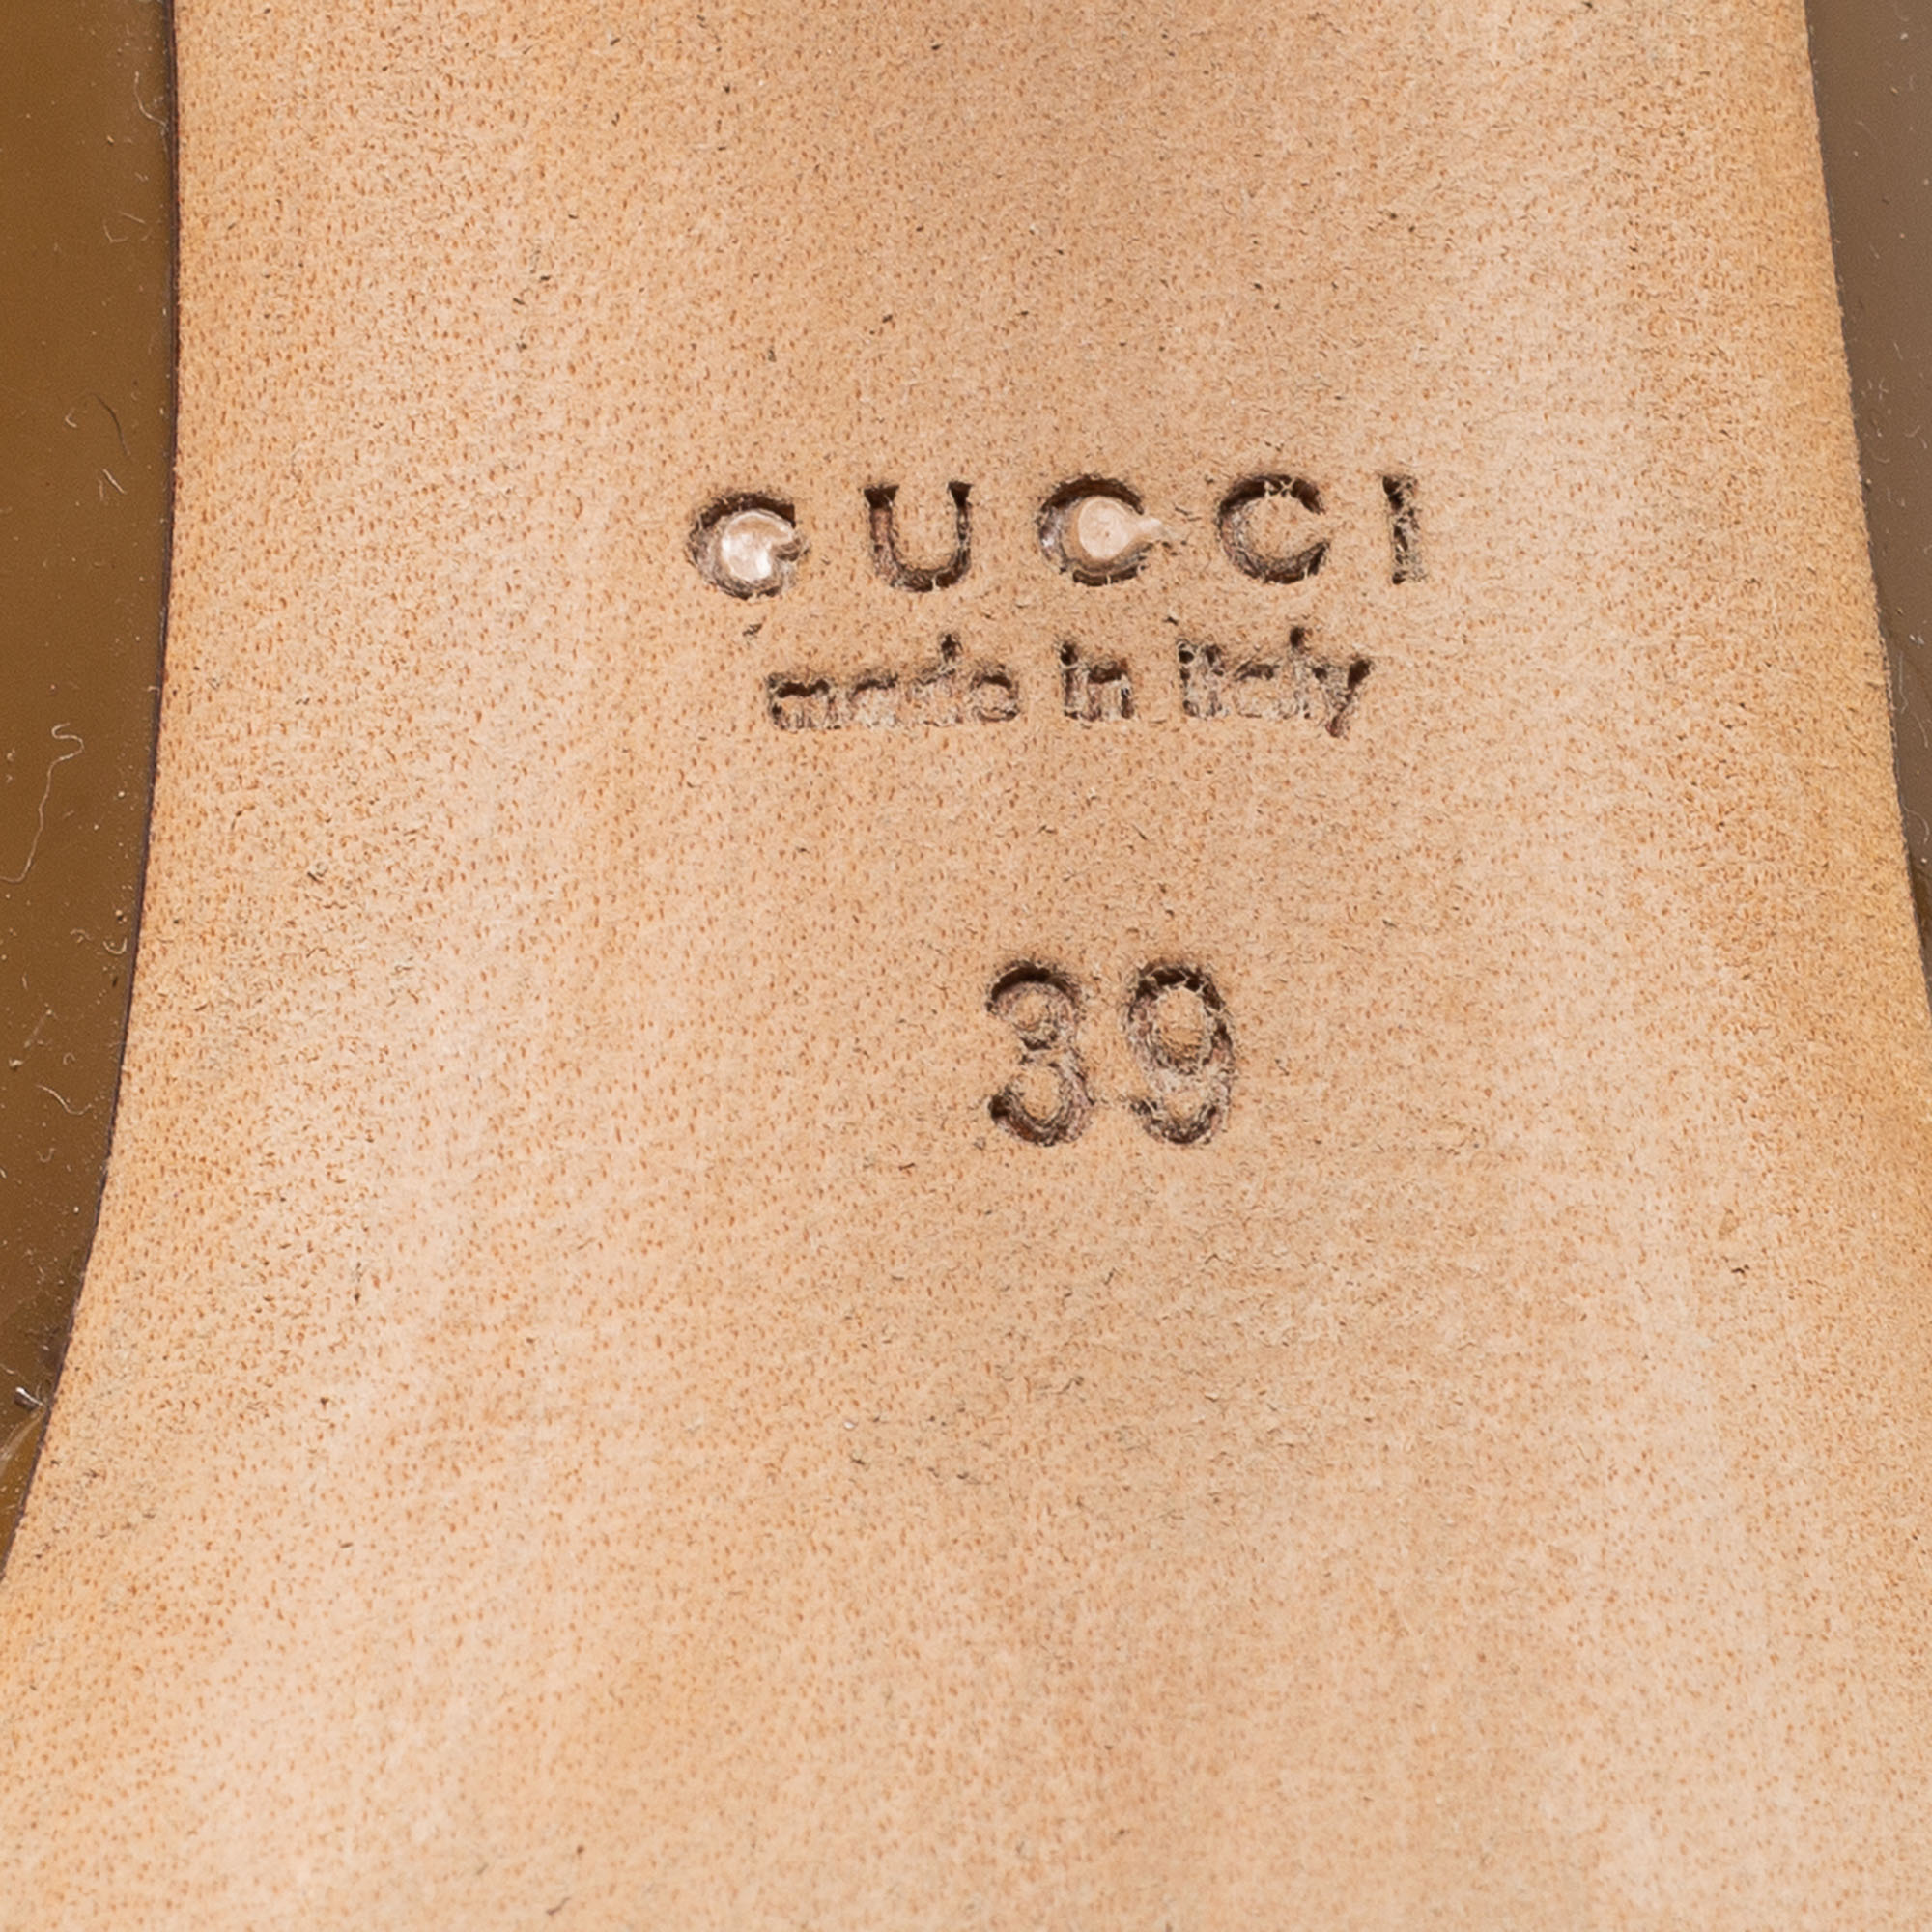 Gucci Olive Green  Patent Leather Tile Square Toe Platform Pumps Size 39